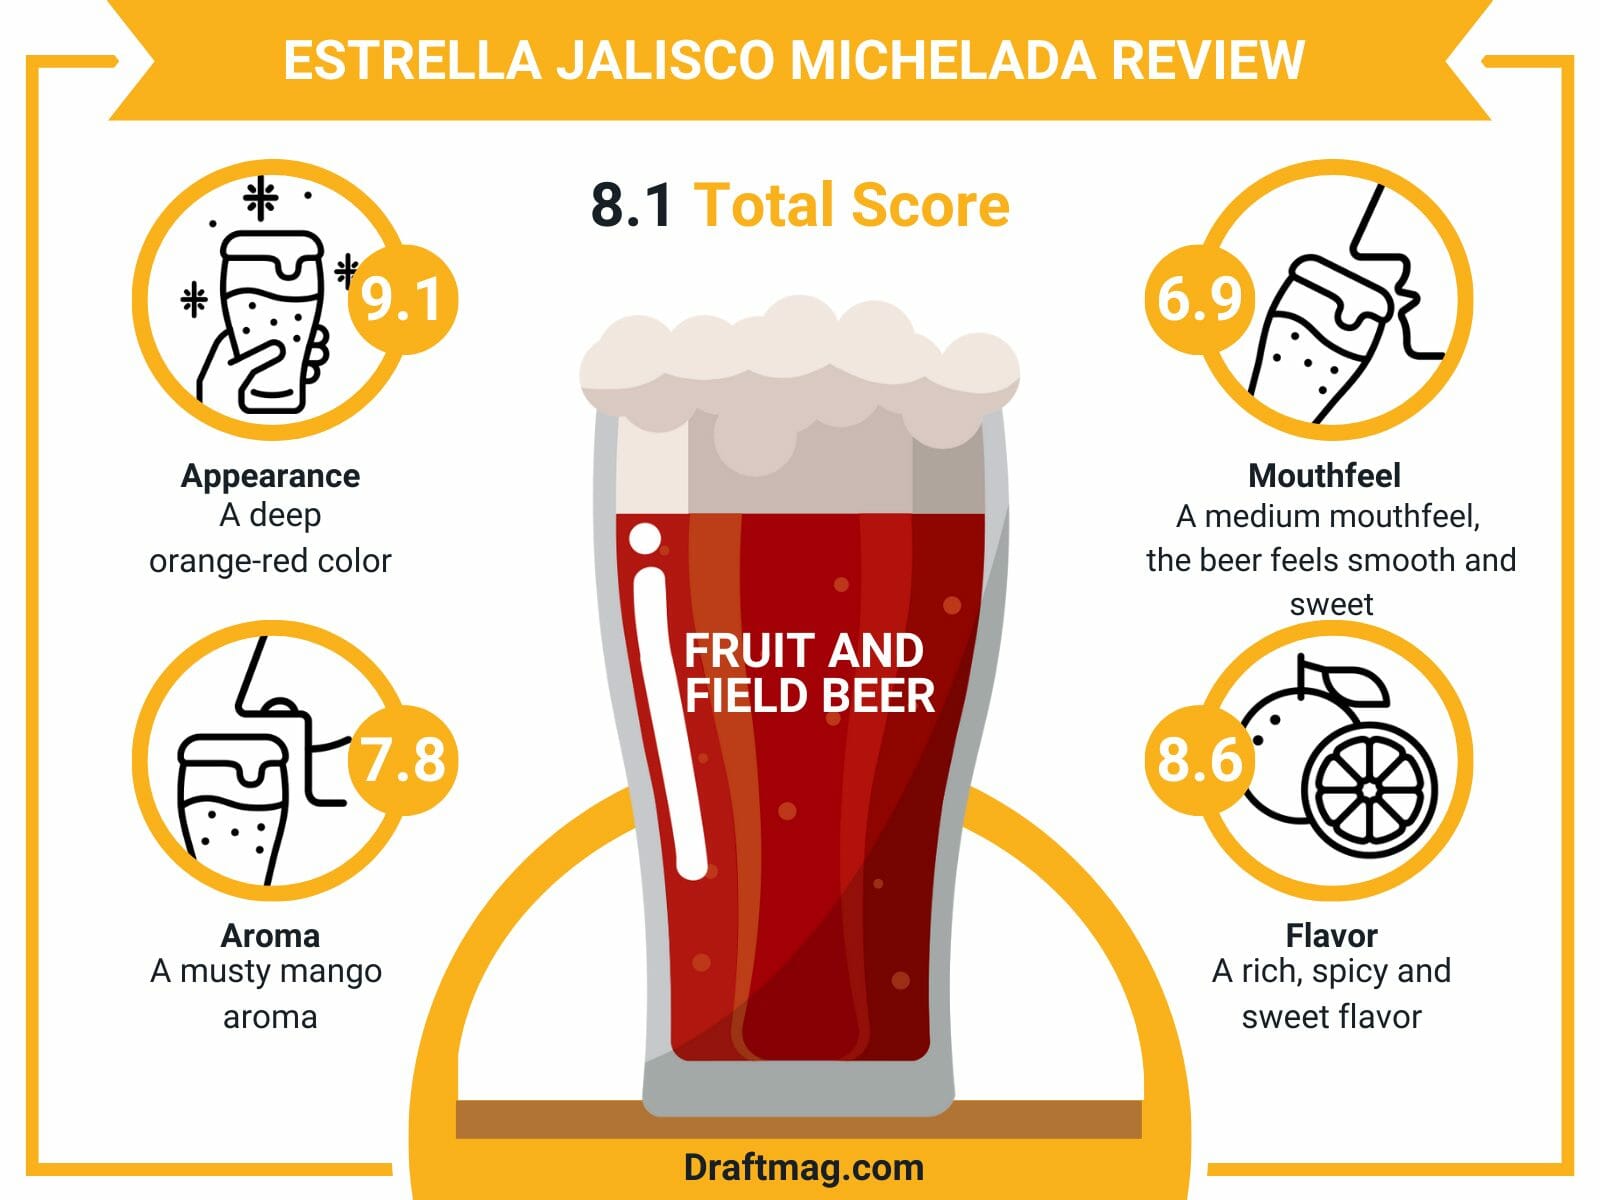 Estrella jalisco michelada review infographic